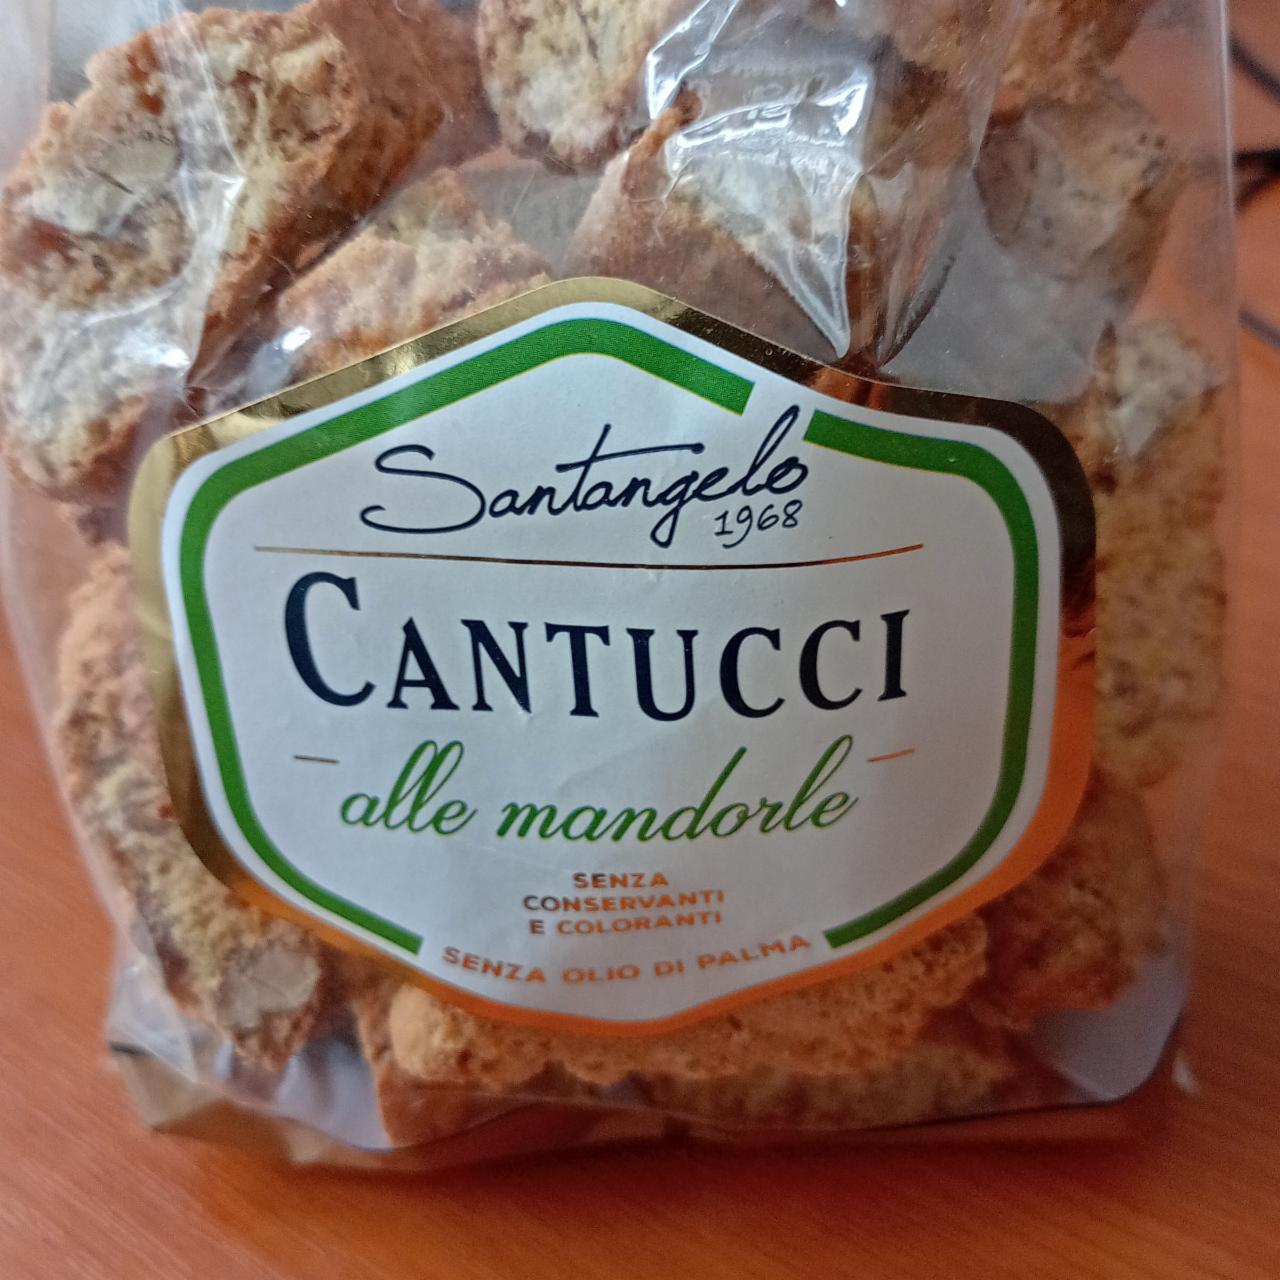 Fotografie - Cantucci alle mandorle Santangelo